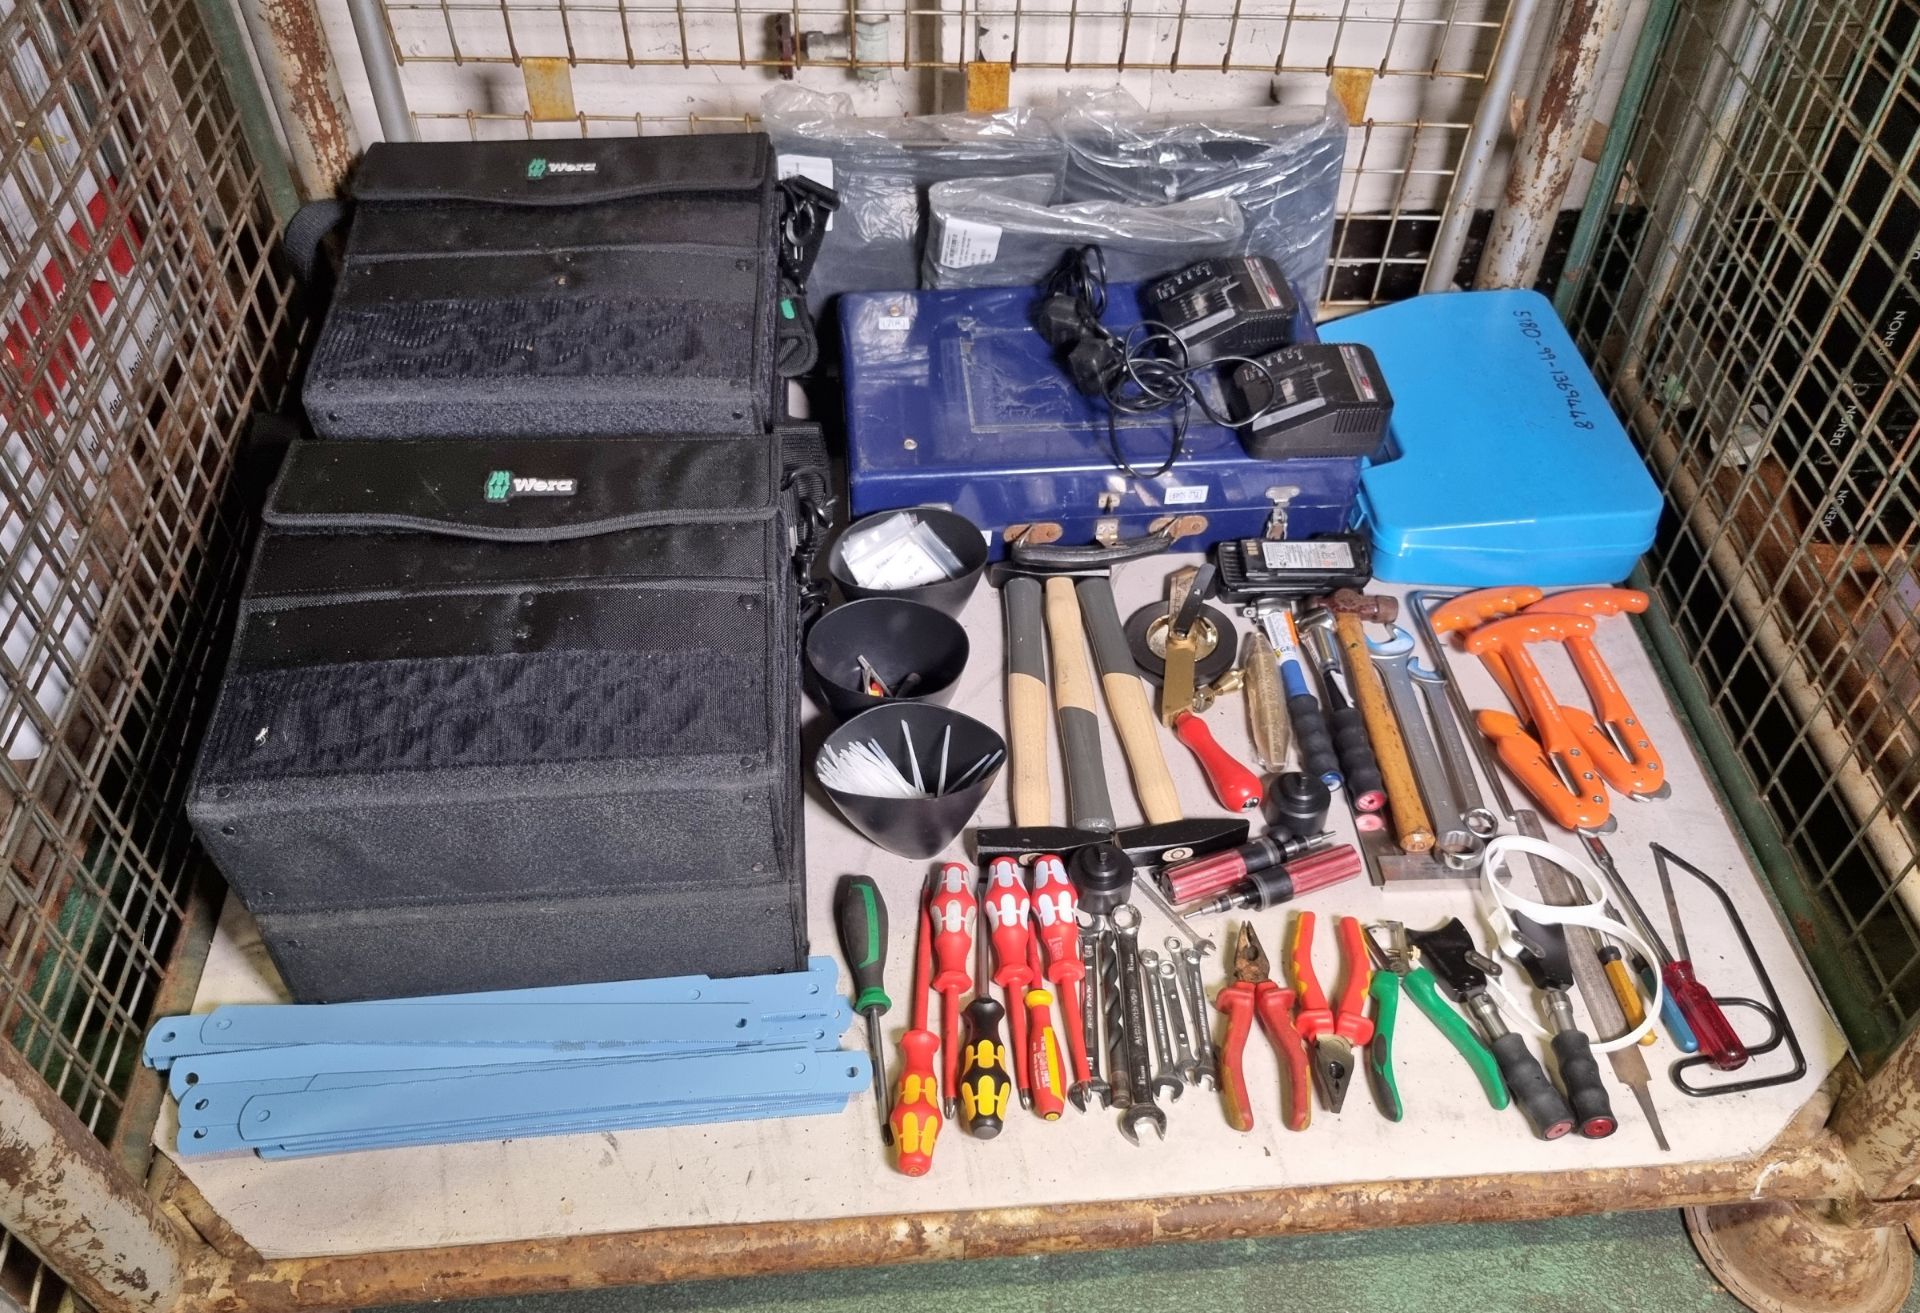 Workshop tools - tool cases, hammers, spanners, screwdrivers, hacksaw, sandpaper, tape measure - Image 2 of 7